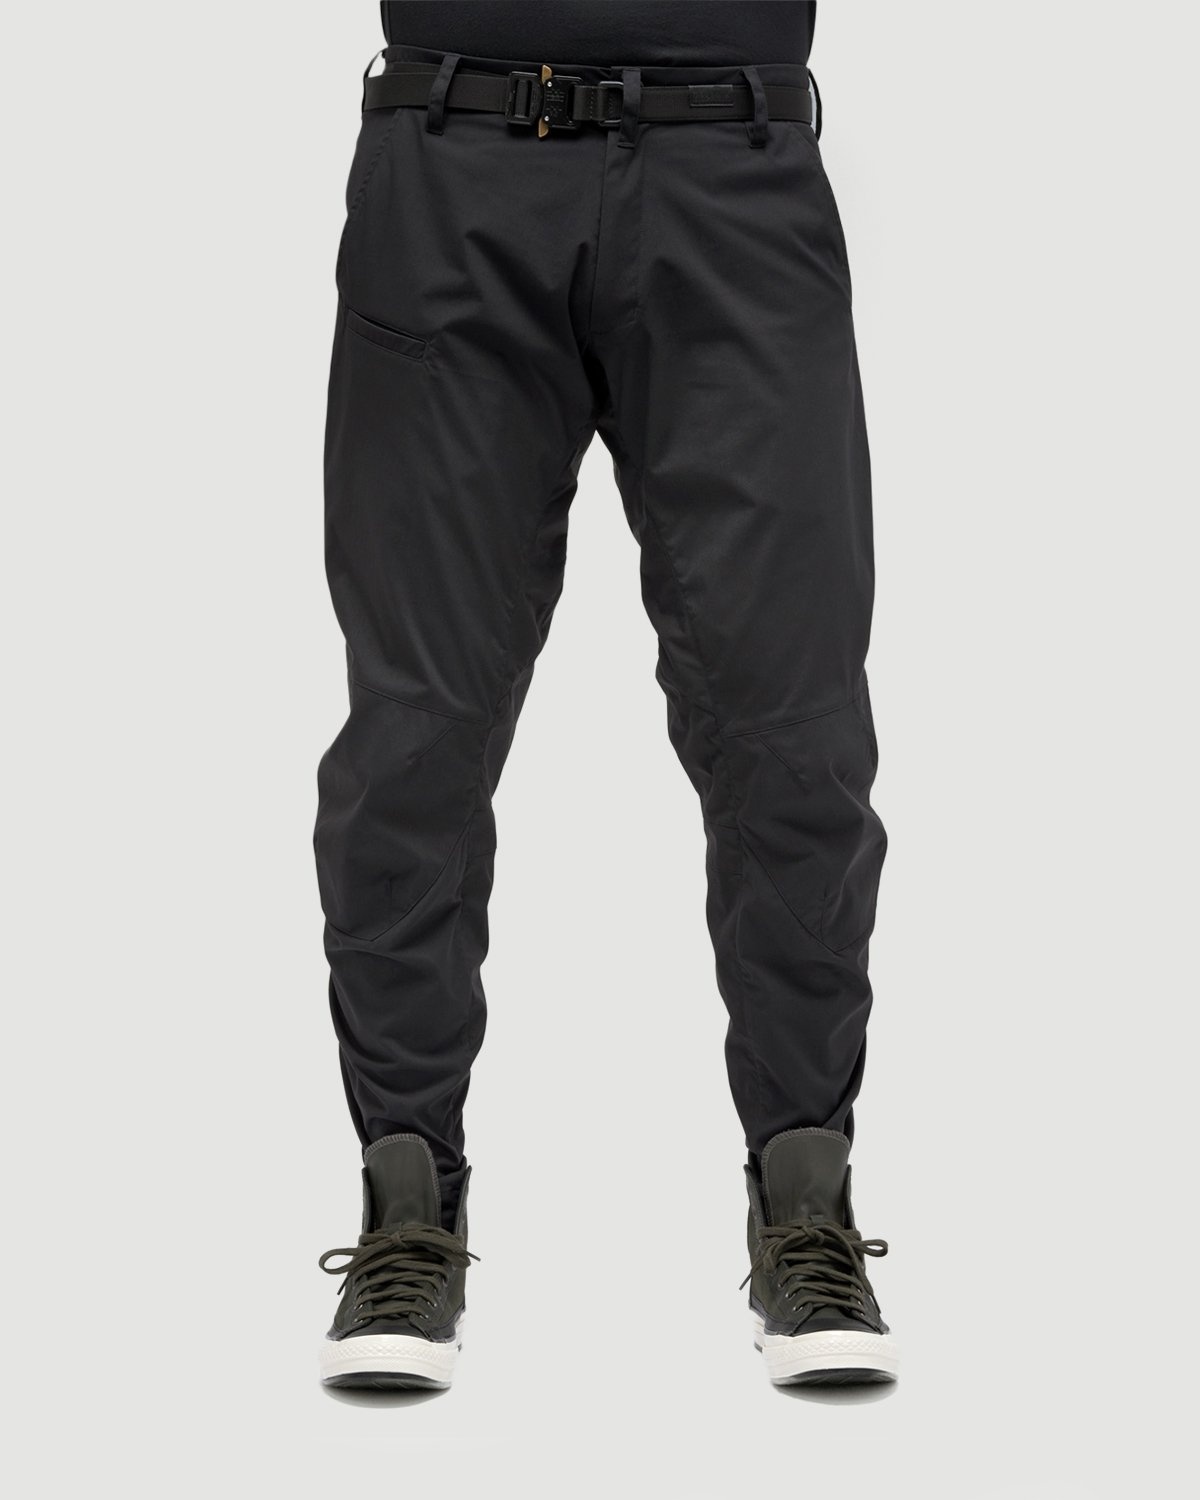 ACRONYM – P10-E Pant Black - Cargo Pants - Black - Image 8